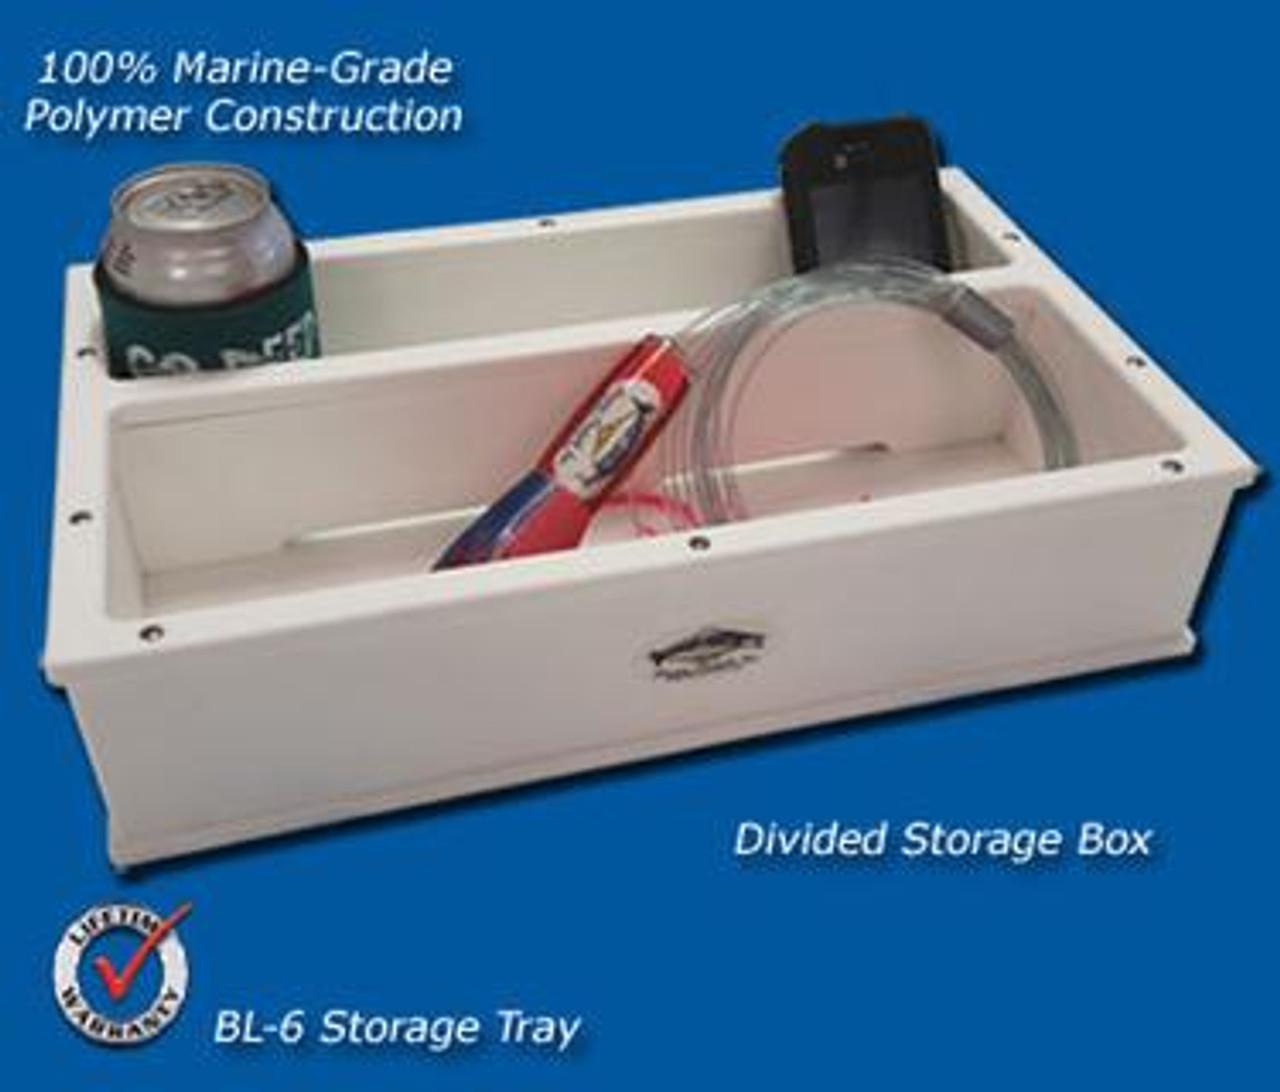 Deep Blue Marine Binocular Storage Box - Large (BL-6) from